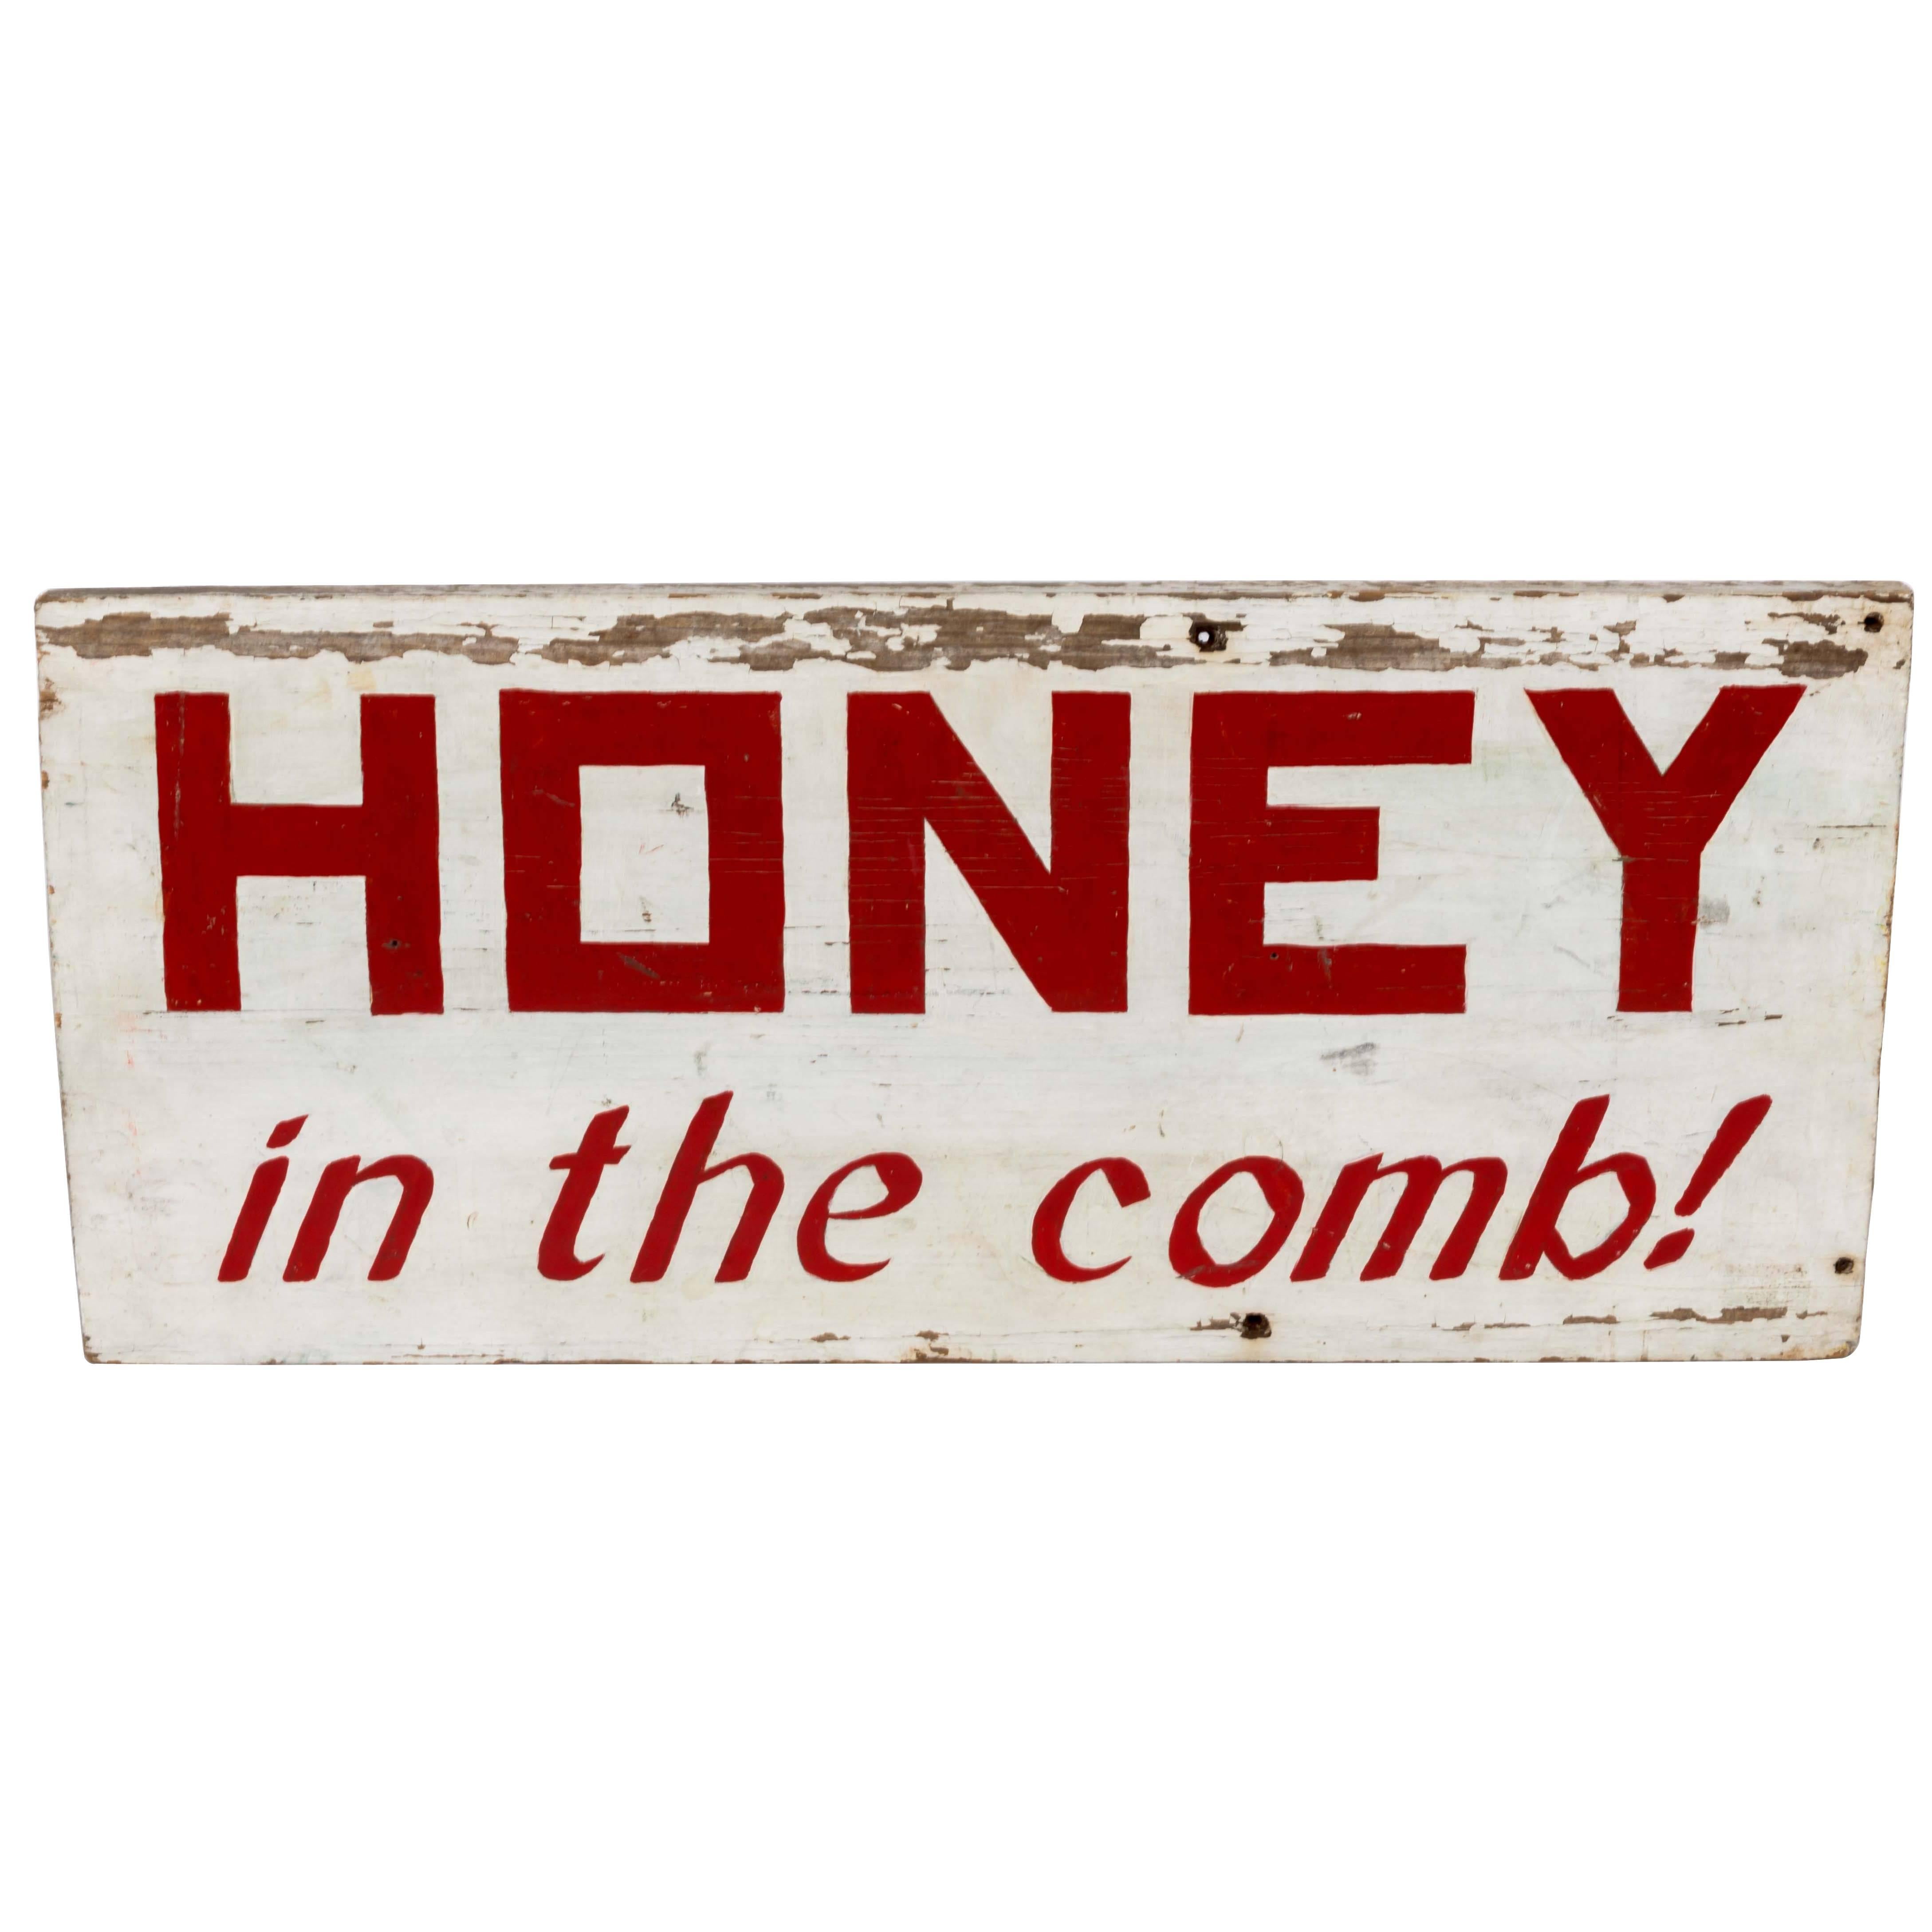 Vintage Folk Art "Honey in the Comb!" Sign